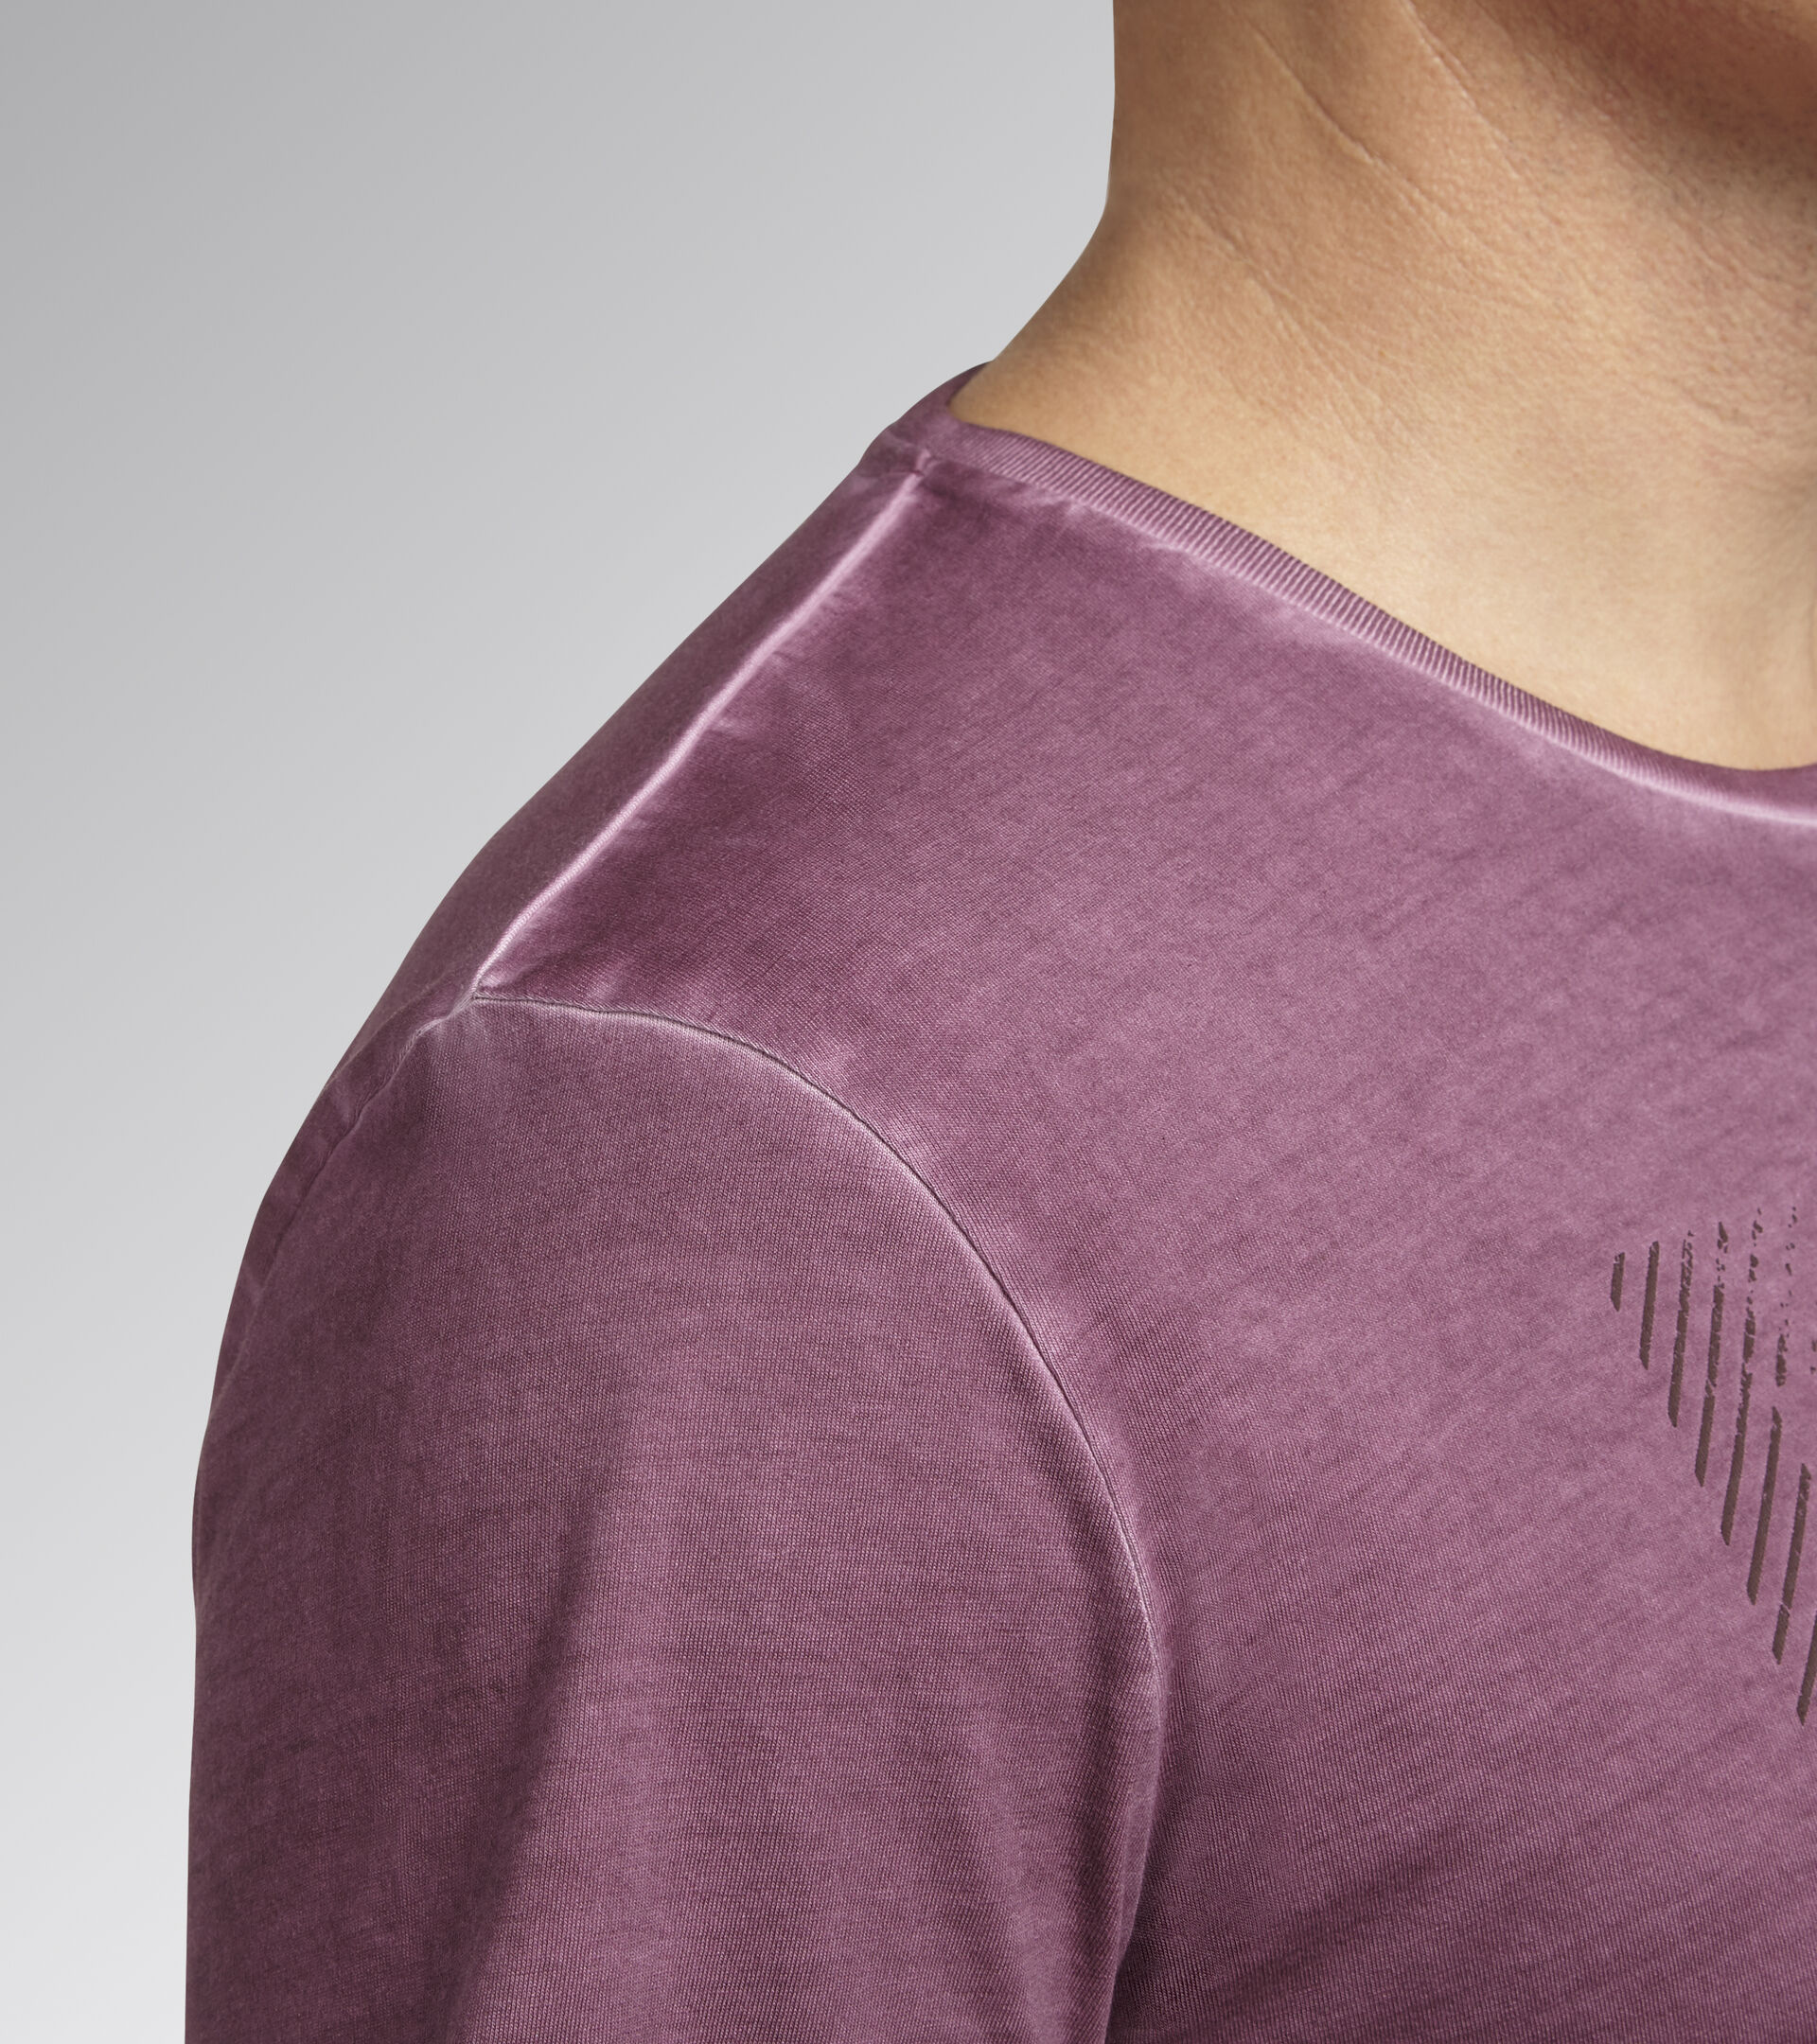 T-shirt manica corta da lavoro T-SHIRT URBAN VIOLA DAMSON - Utility